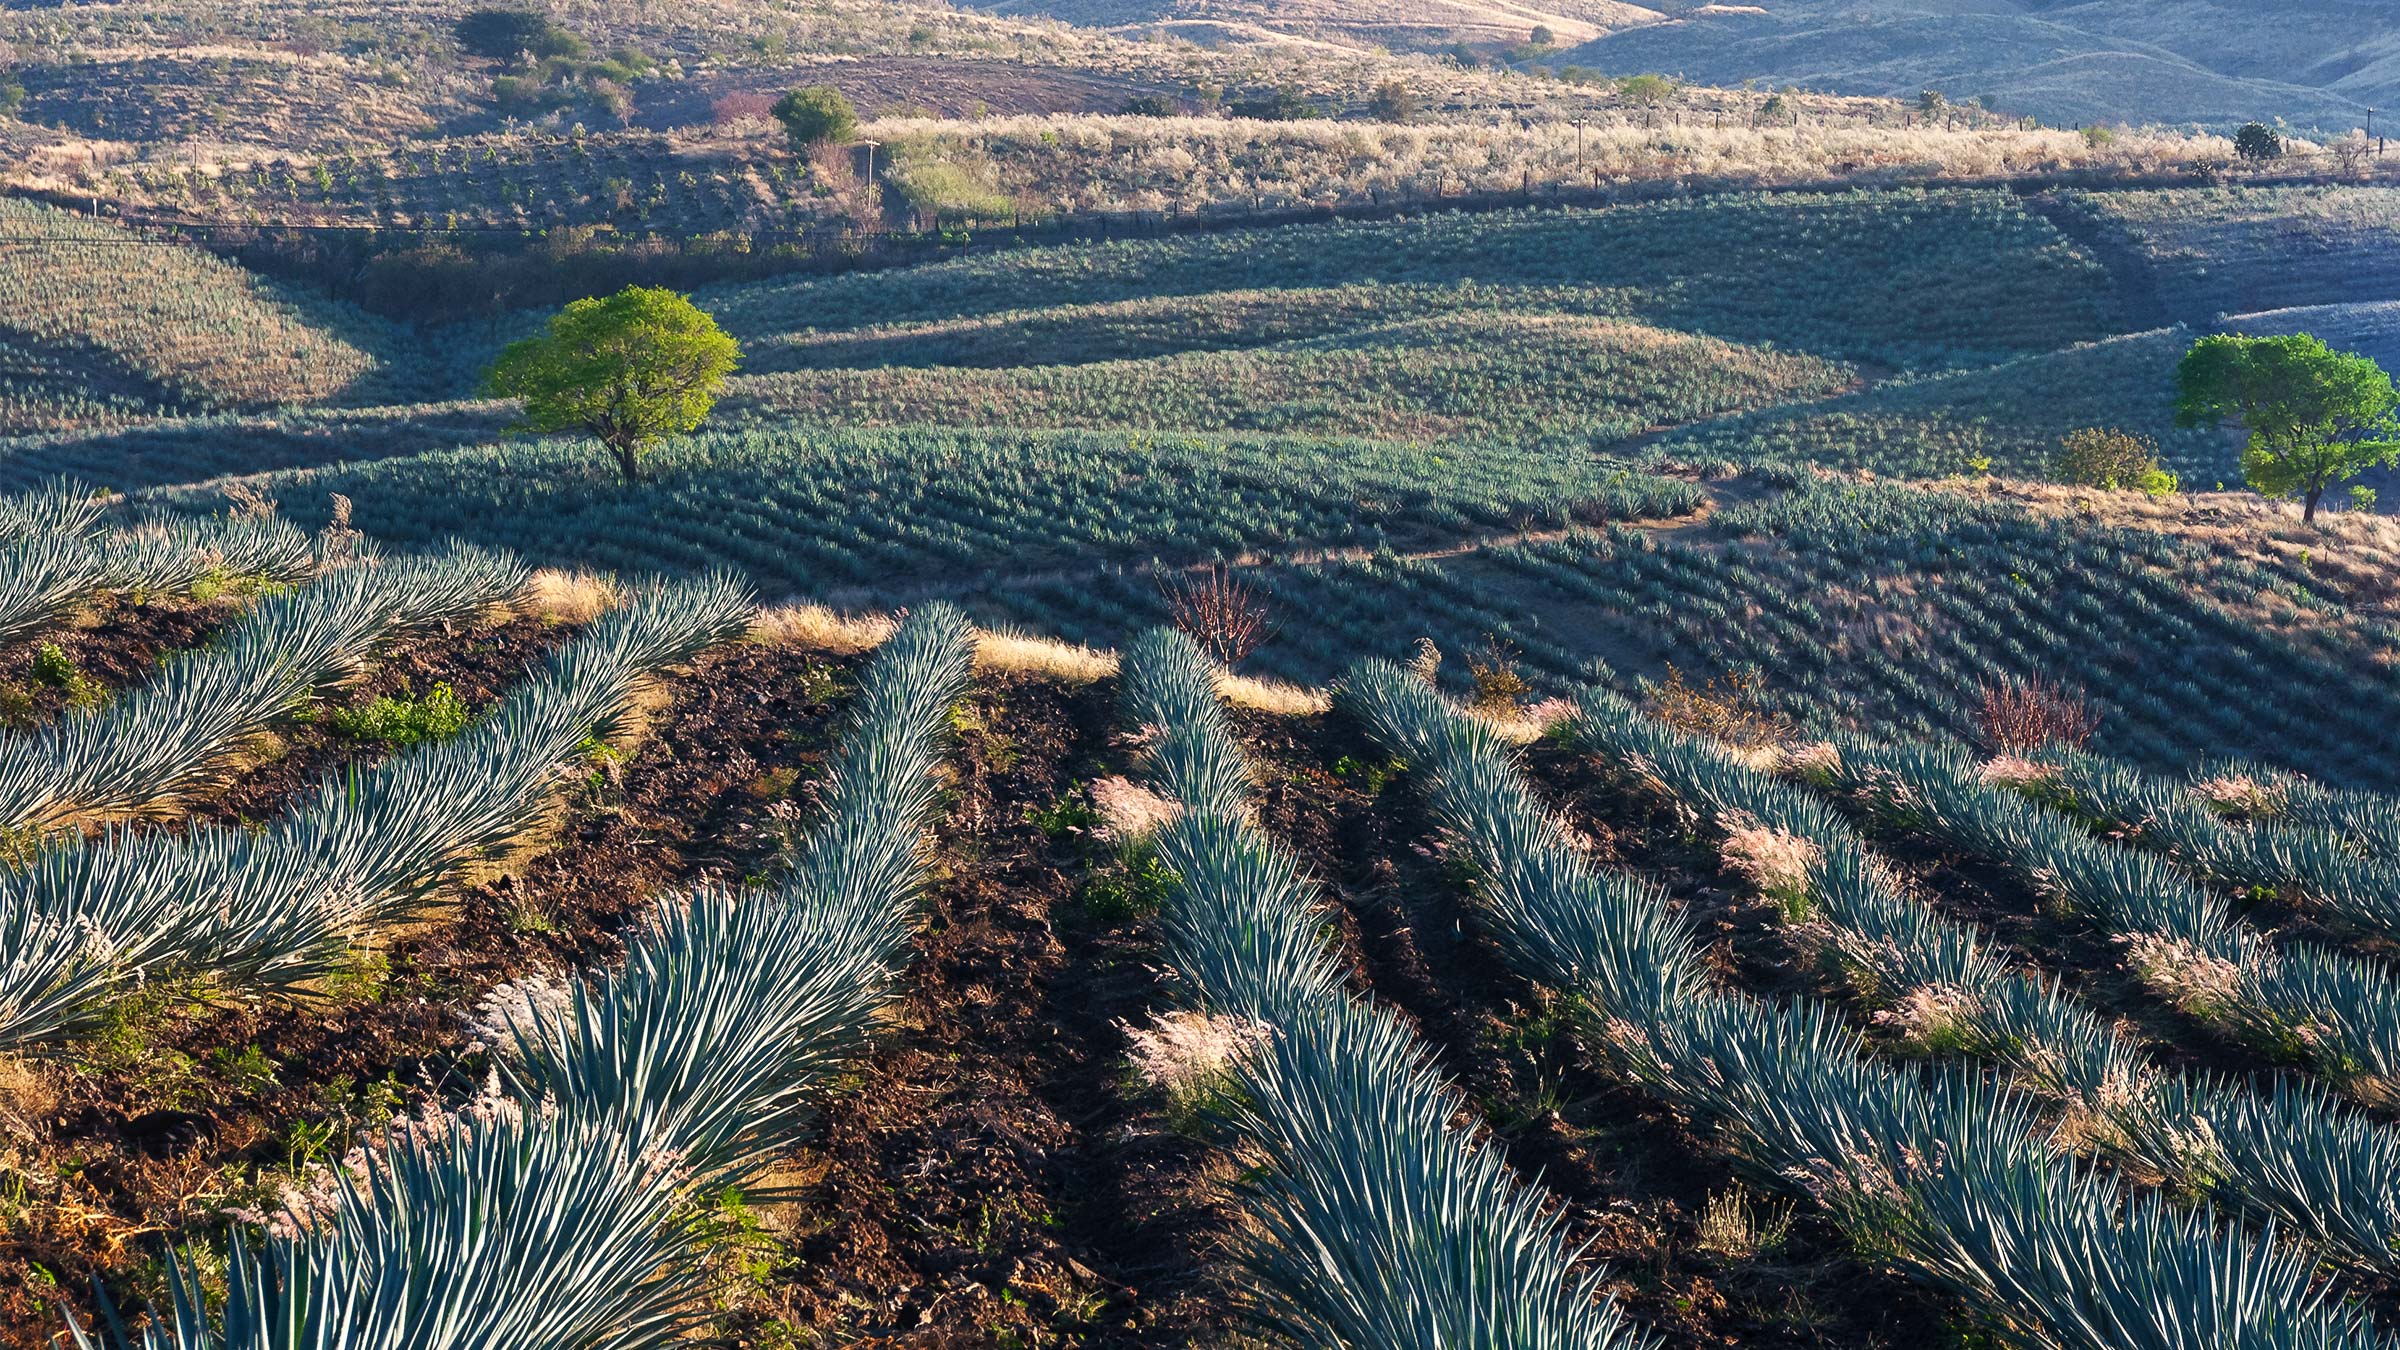 Tequila sunrise: a new era for Mexico’s signature spirit